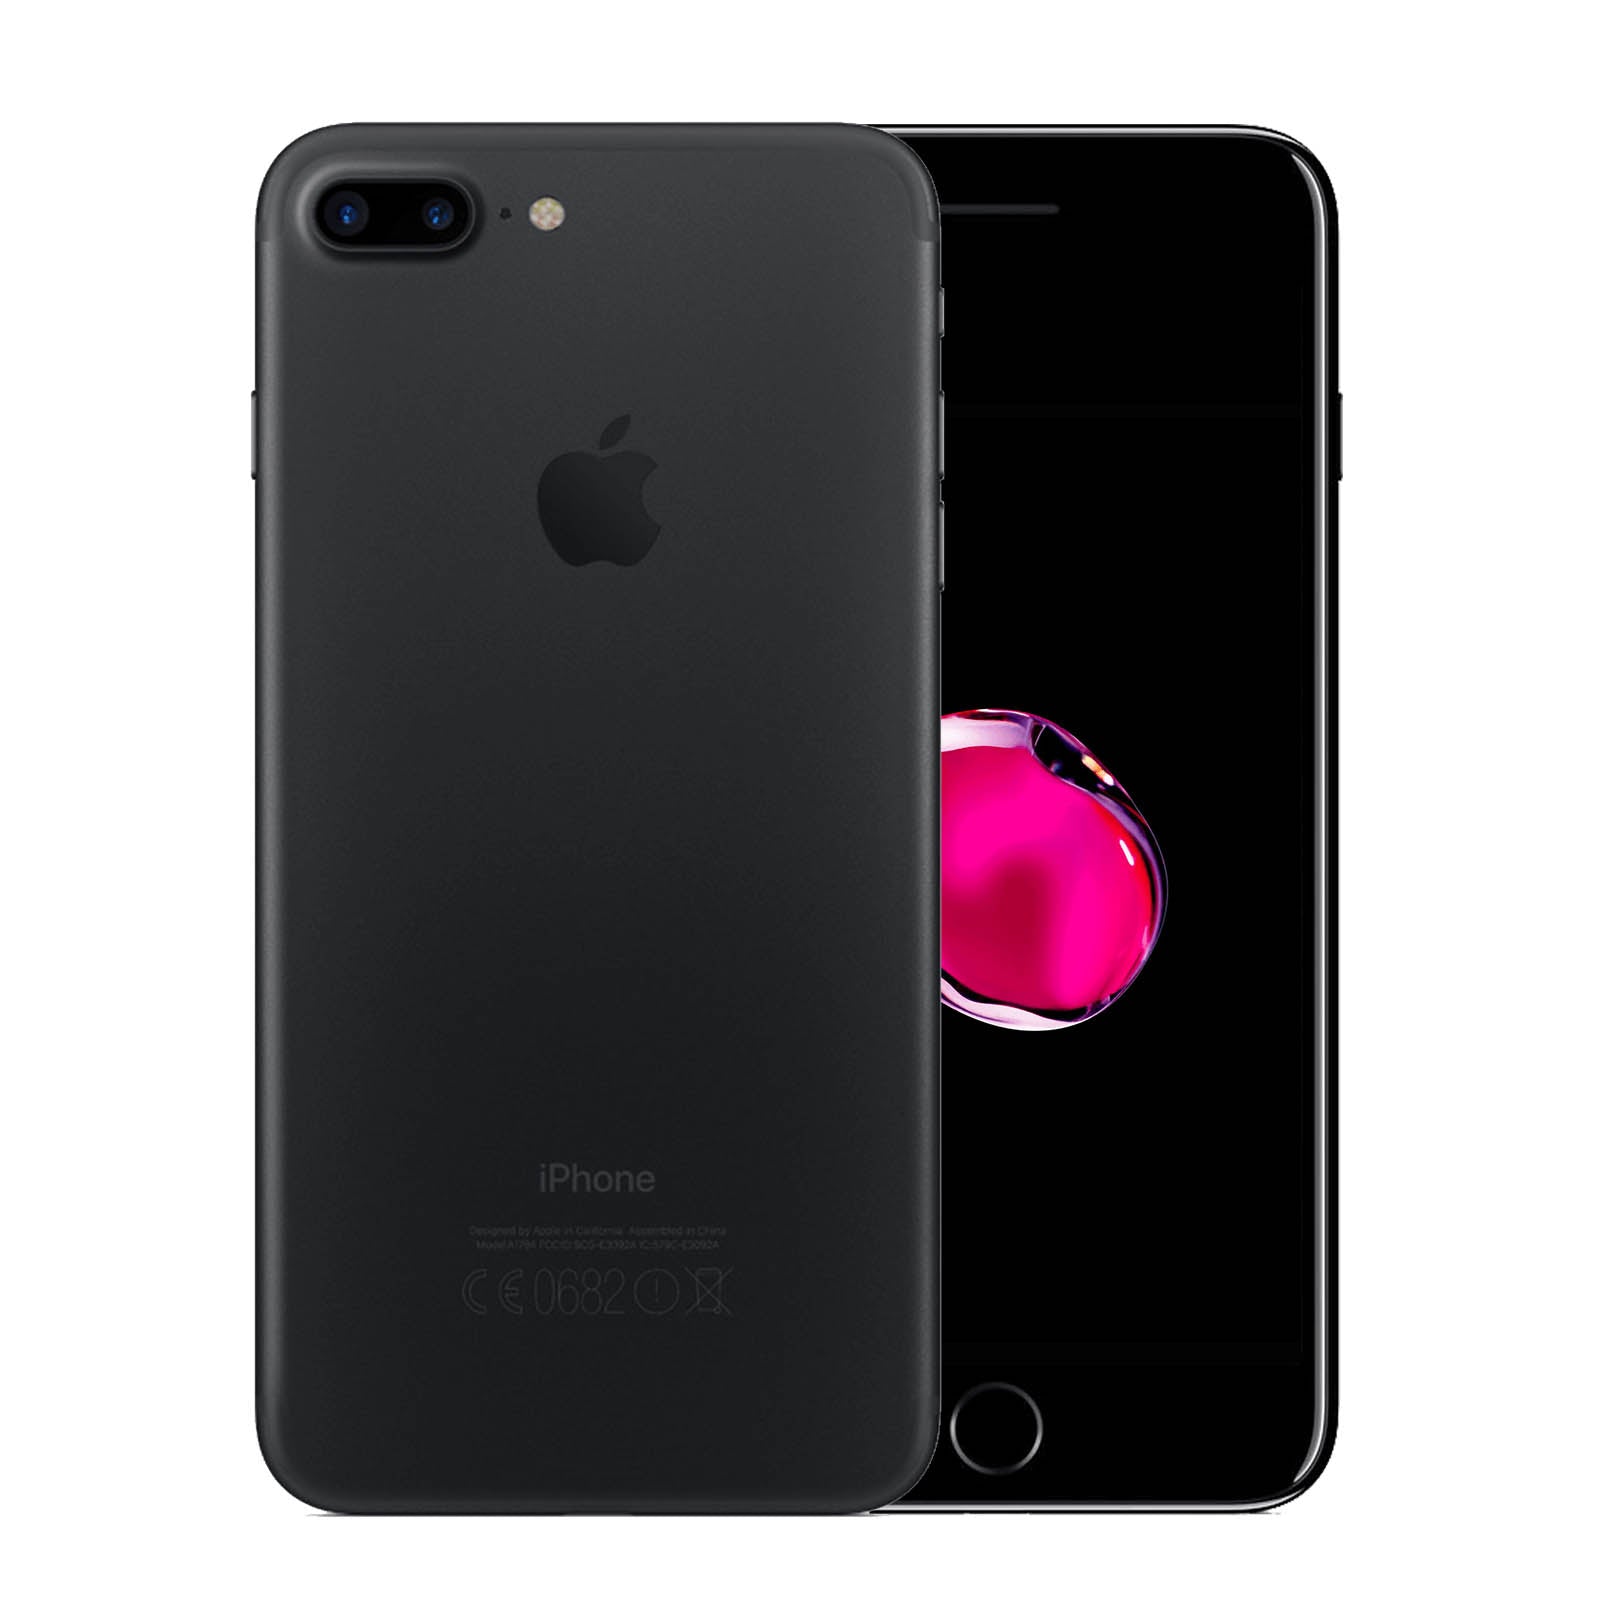 Apple iPhone 7 Plus 32GB Nero Discreto Sbloccato